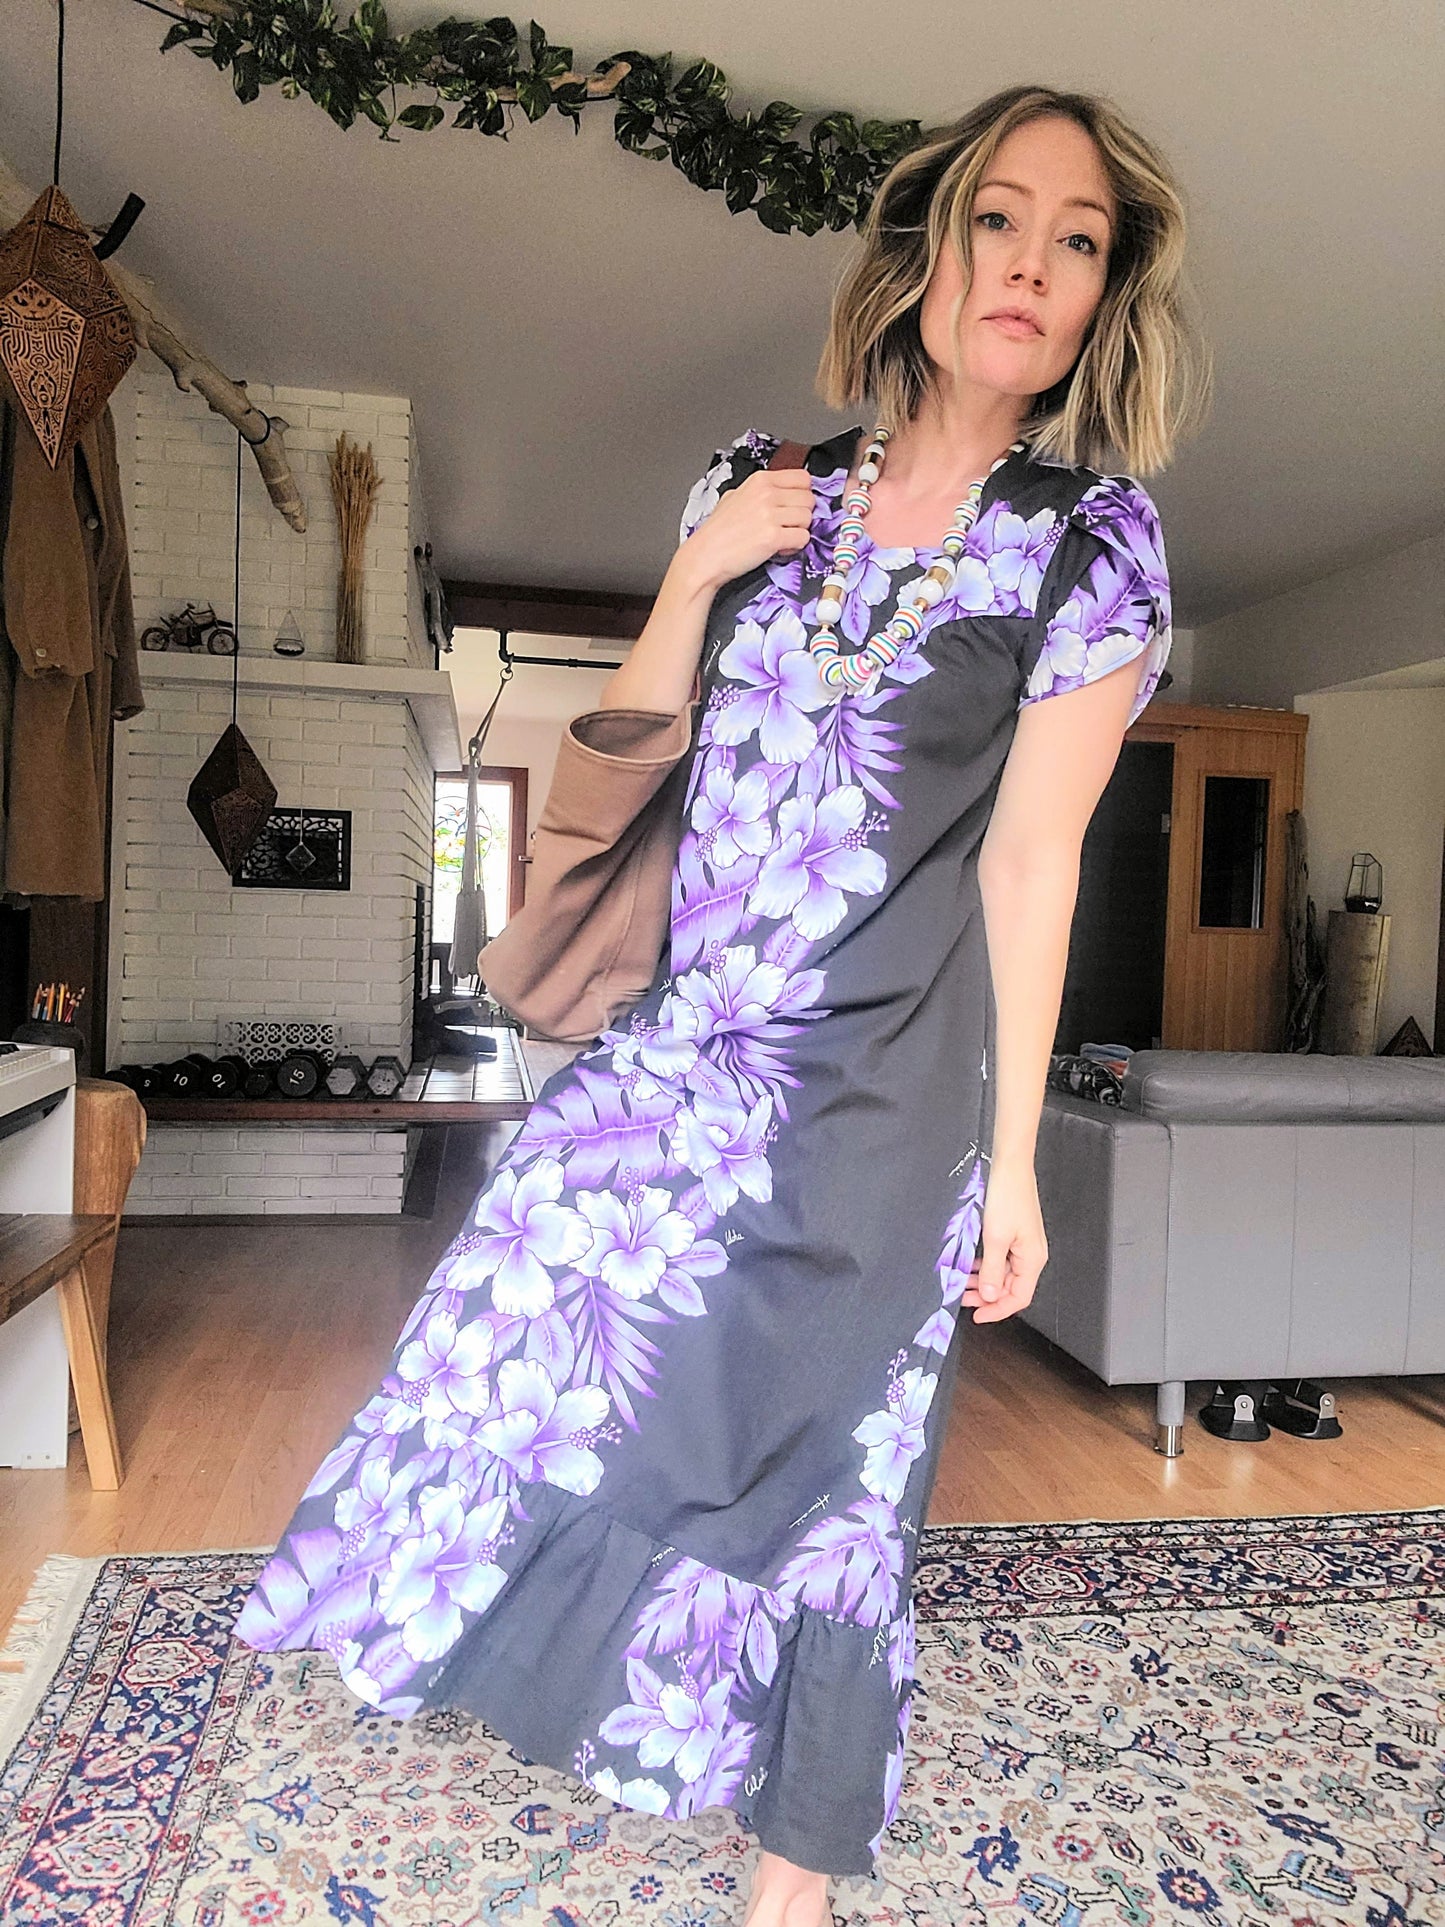 The Purple Hawaiian Summer Dress